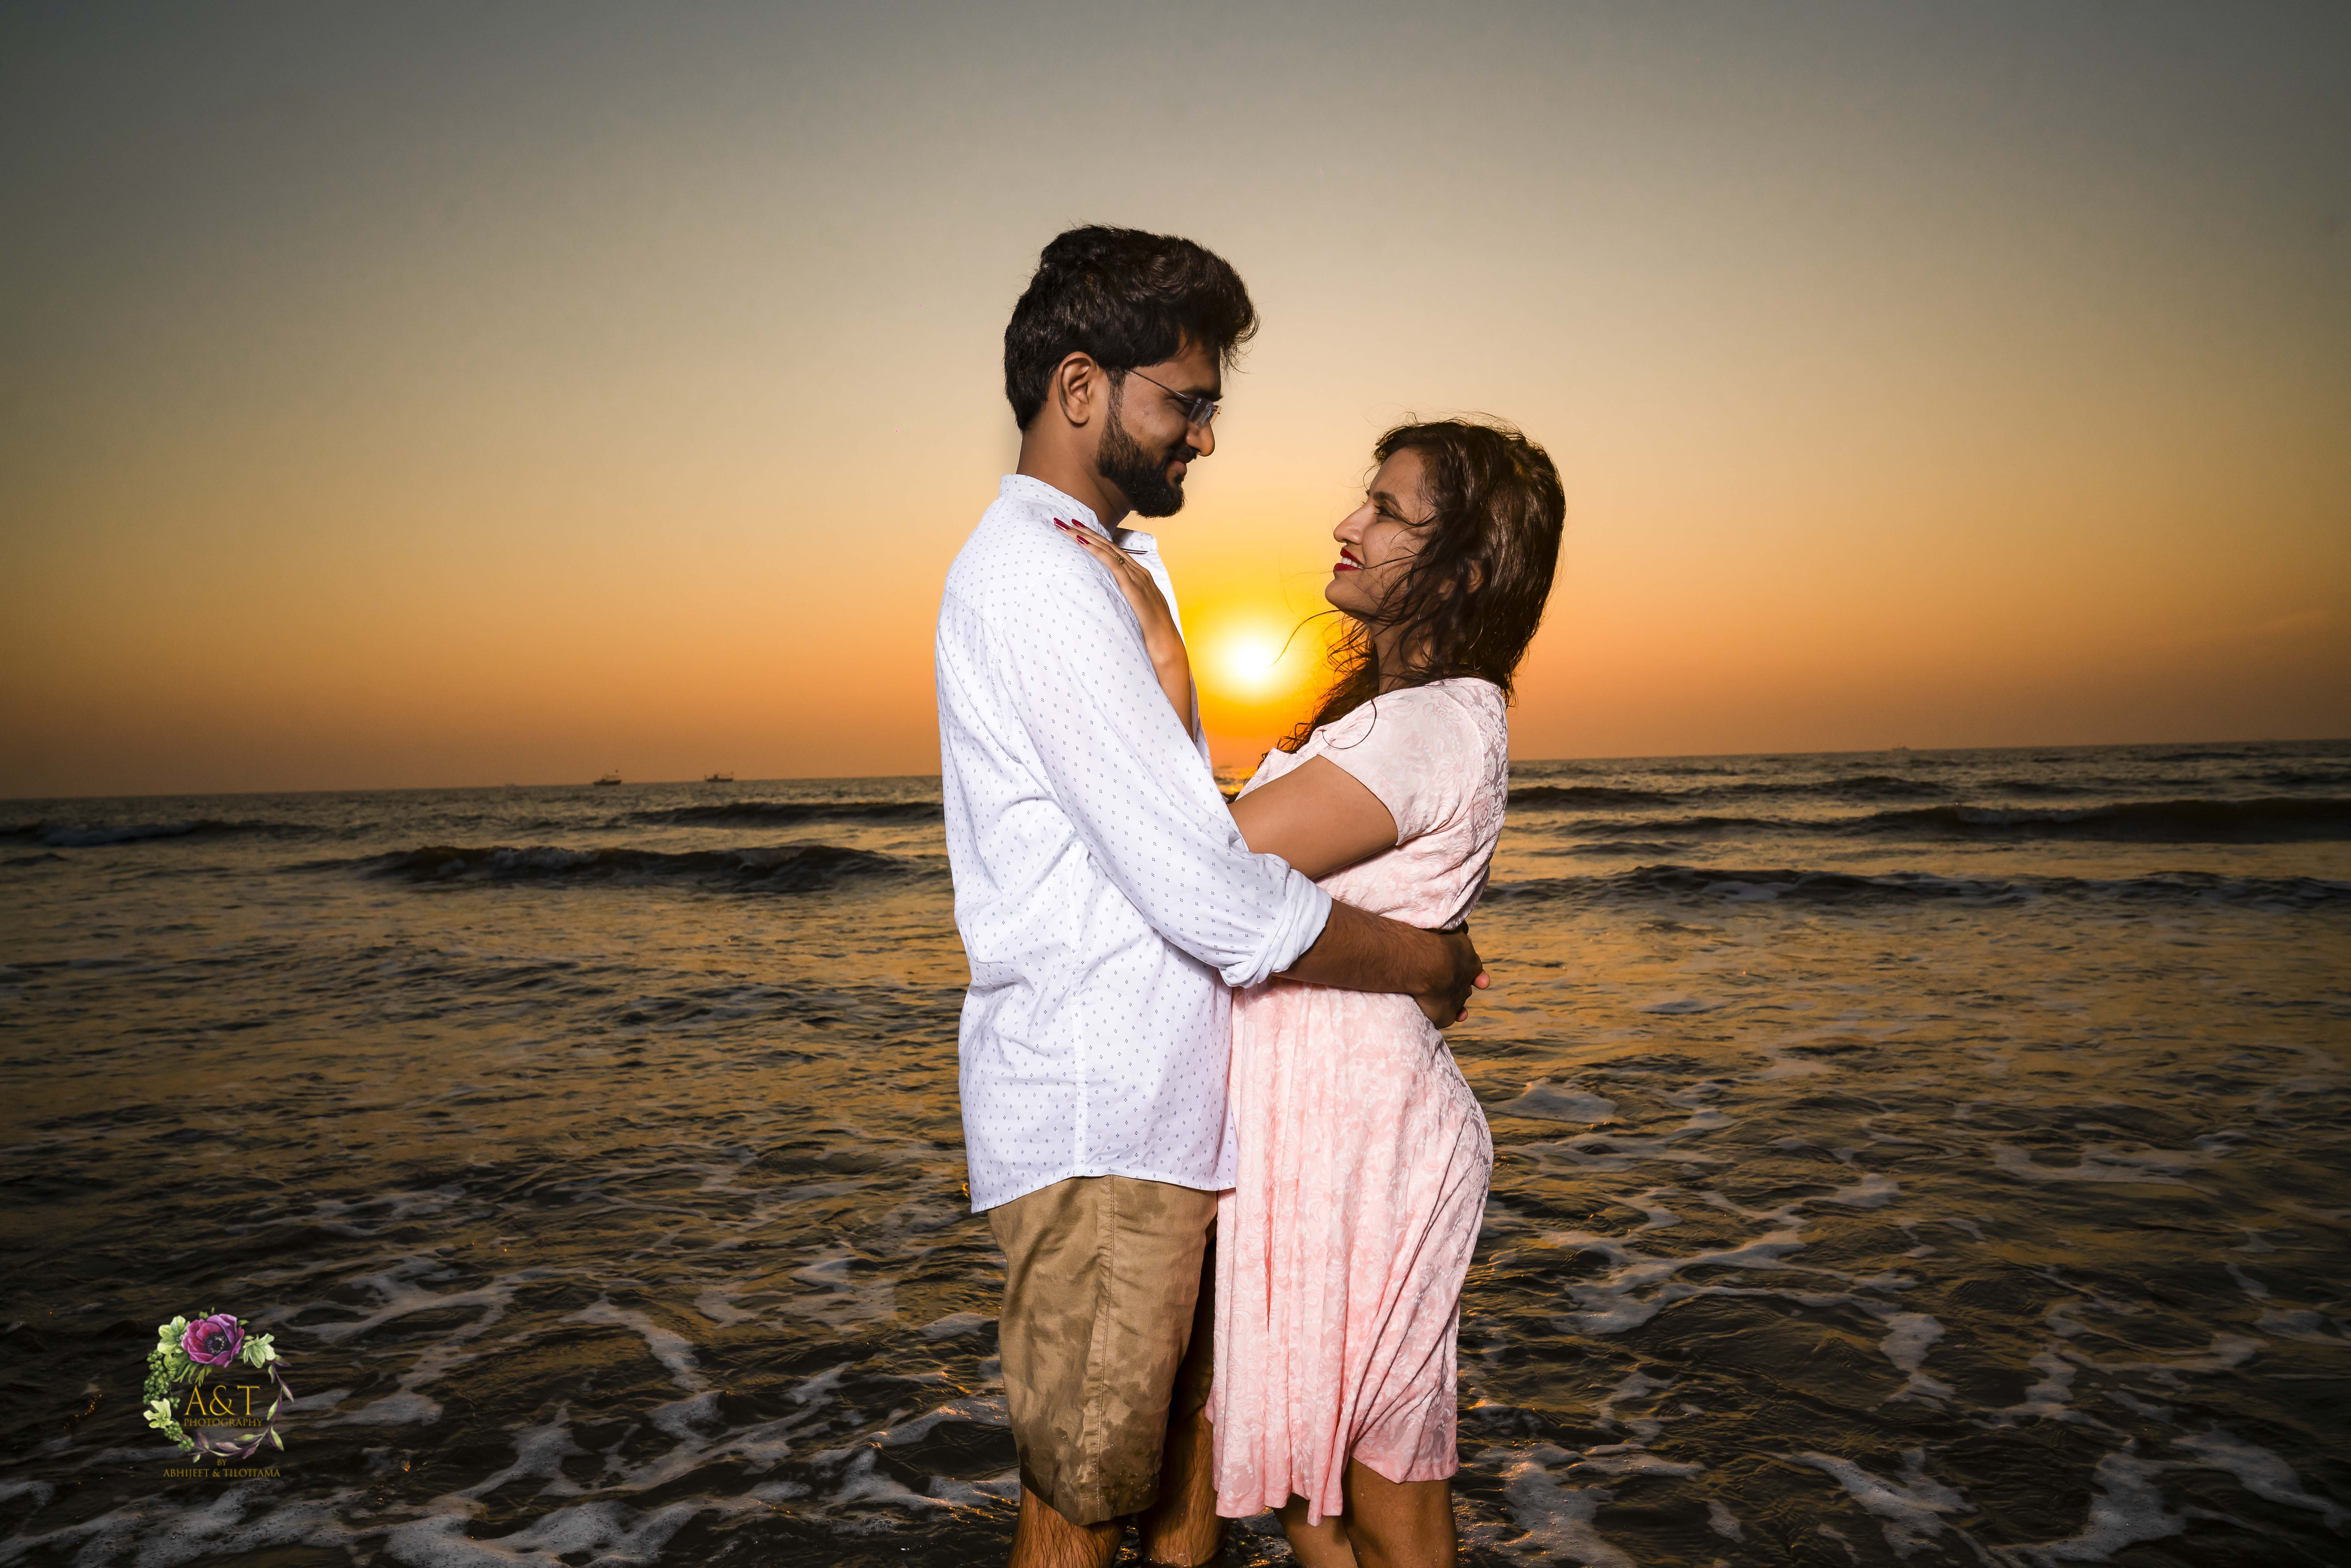 Sunset Pre-wedding Poses from Best Prewedding Photoshoot of Nayan & Bhushan at Alibag Beach